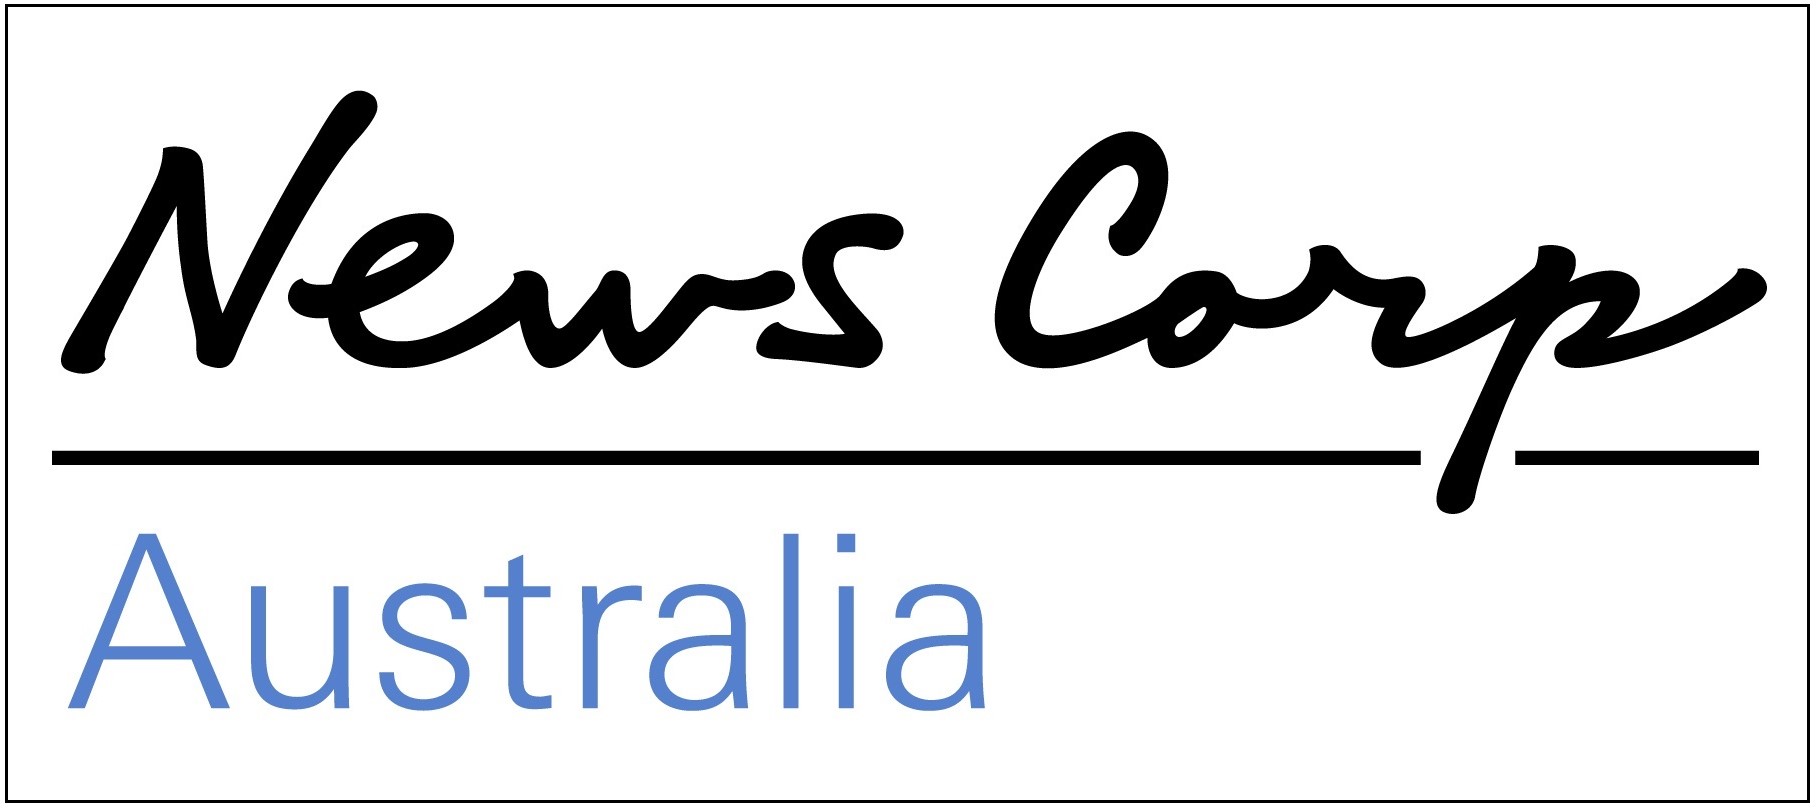 News Corp Australia announces Catalano deal off the table